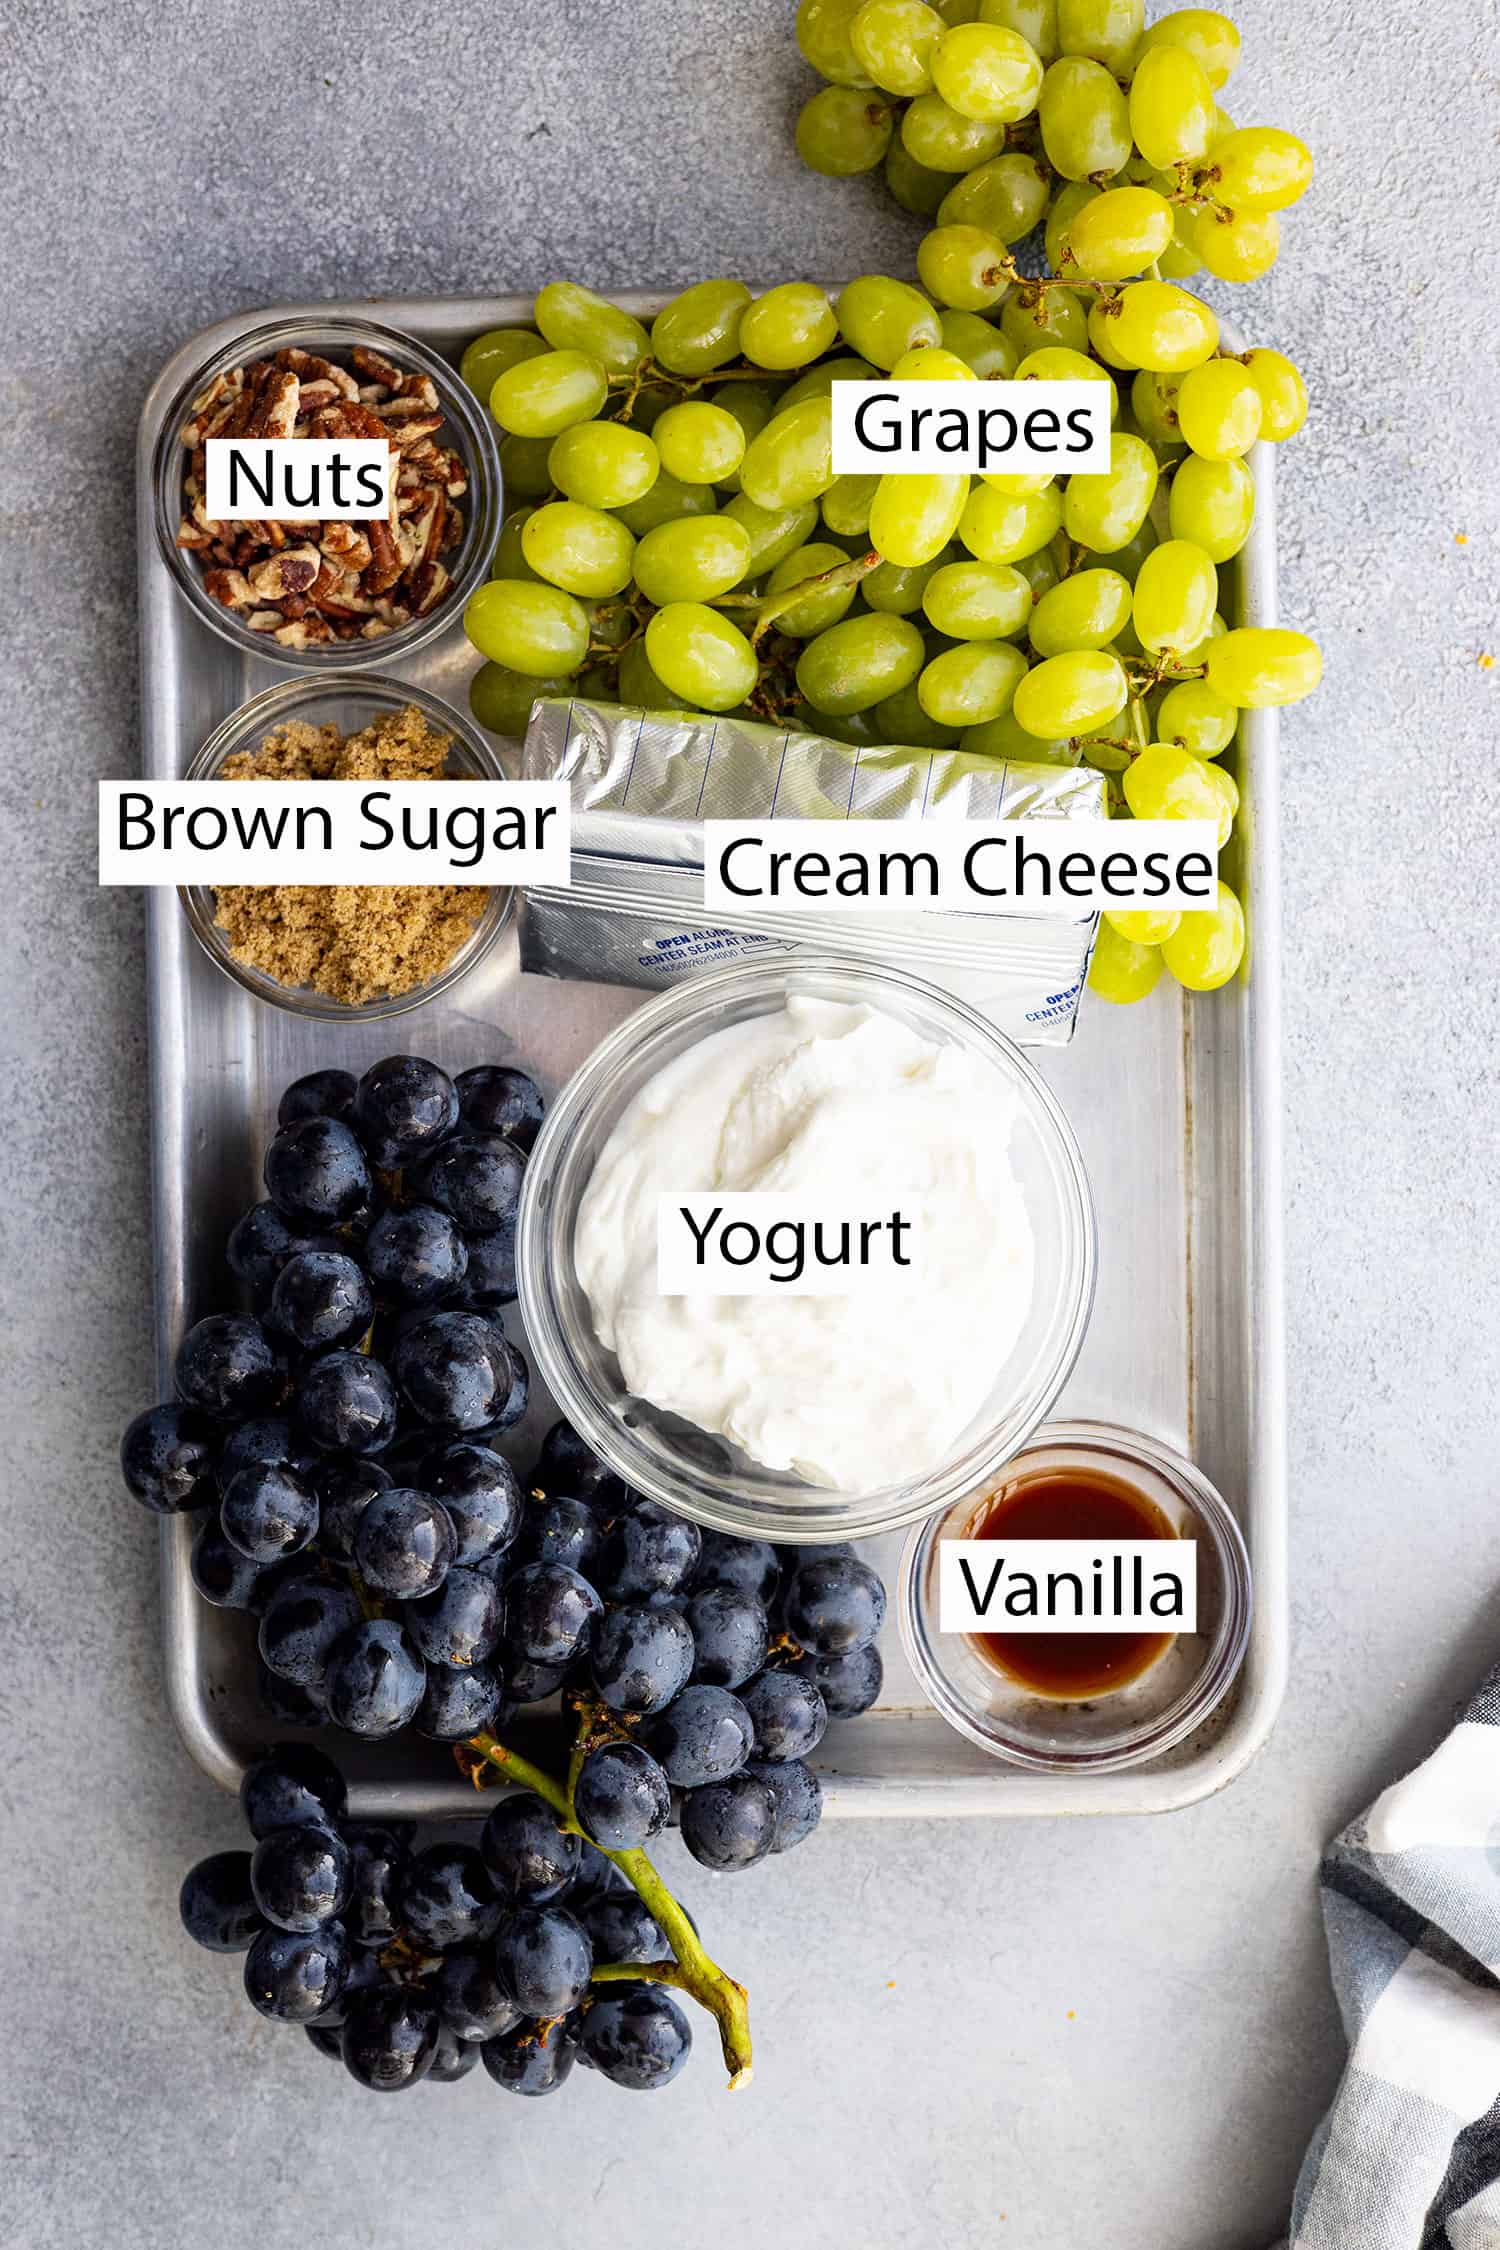 Ingredients: Grapes, cream cheese, yogurt, brown sugar, nuts, and vanilla.